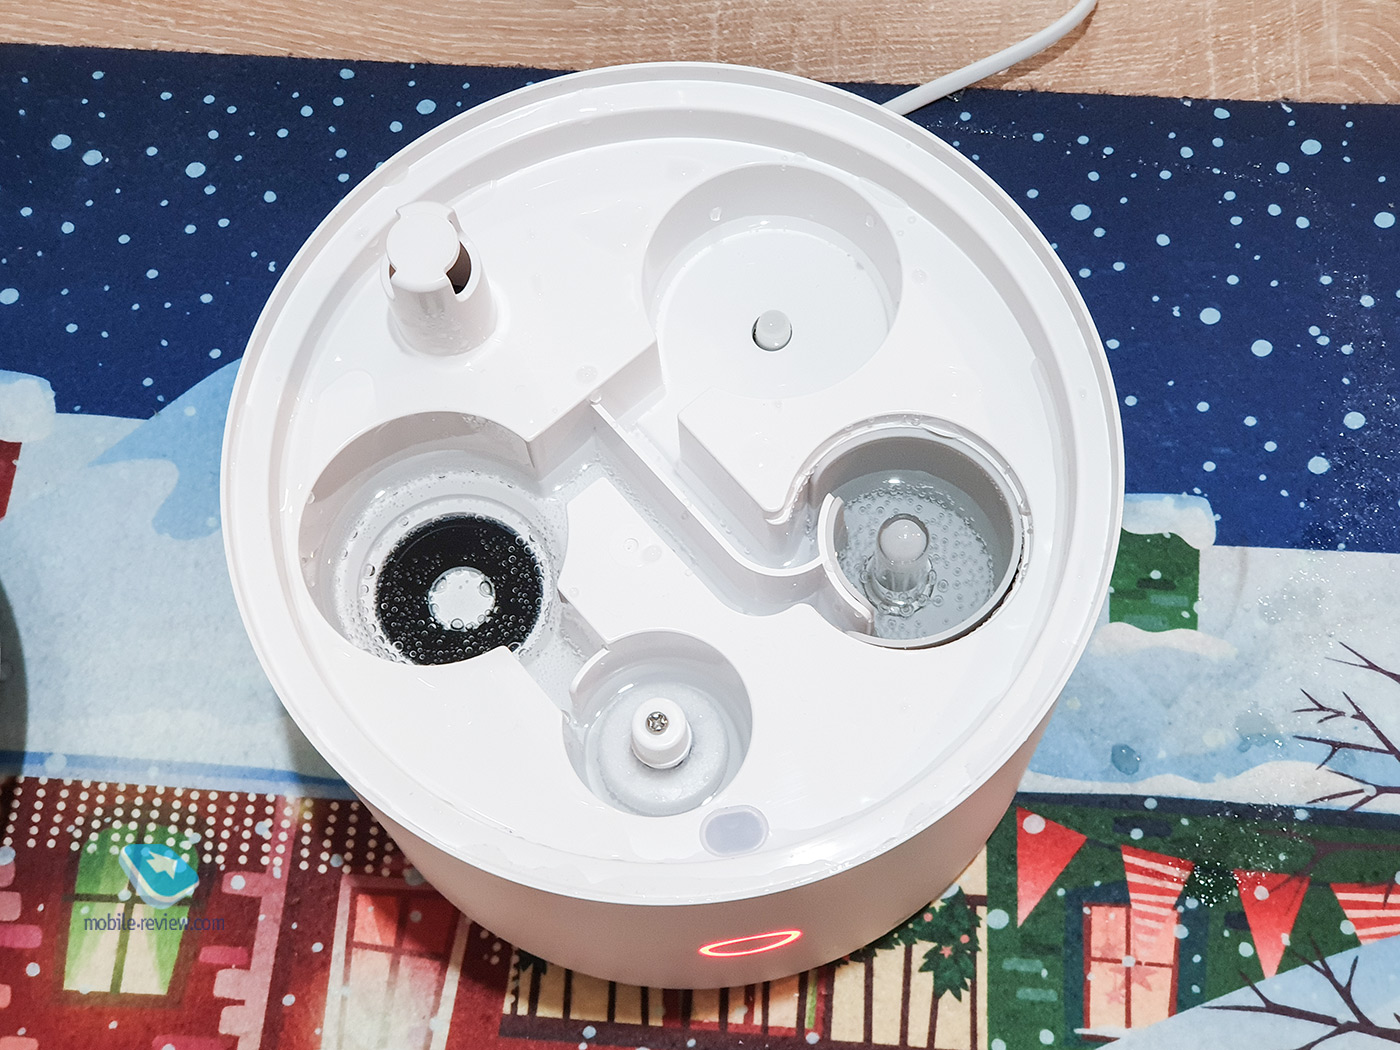   Mi Smart Antibacterial Humidifier  Xiaomi (   )